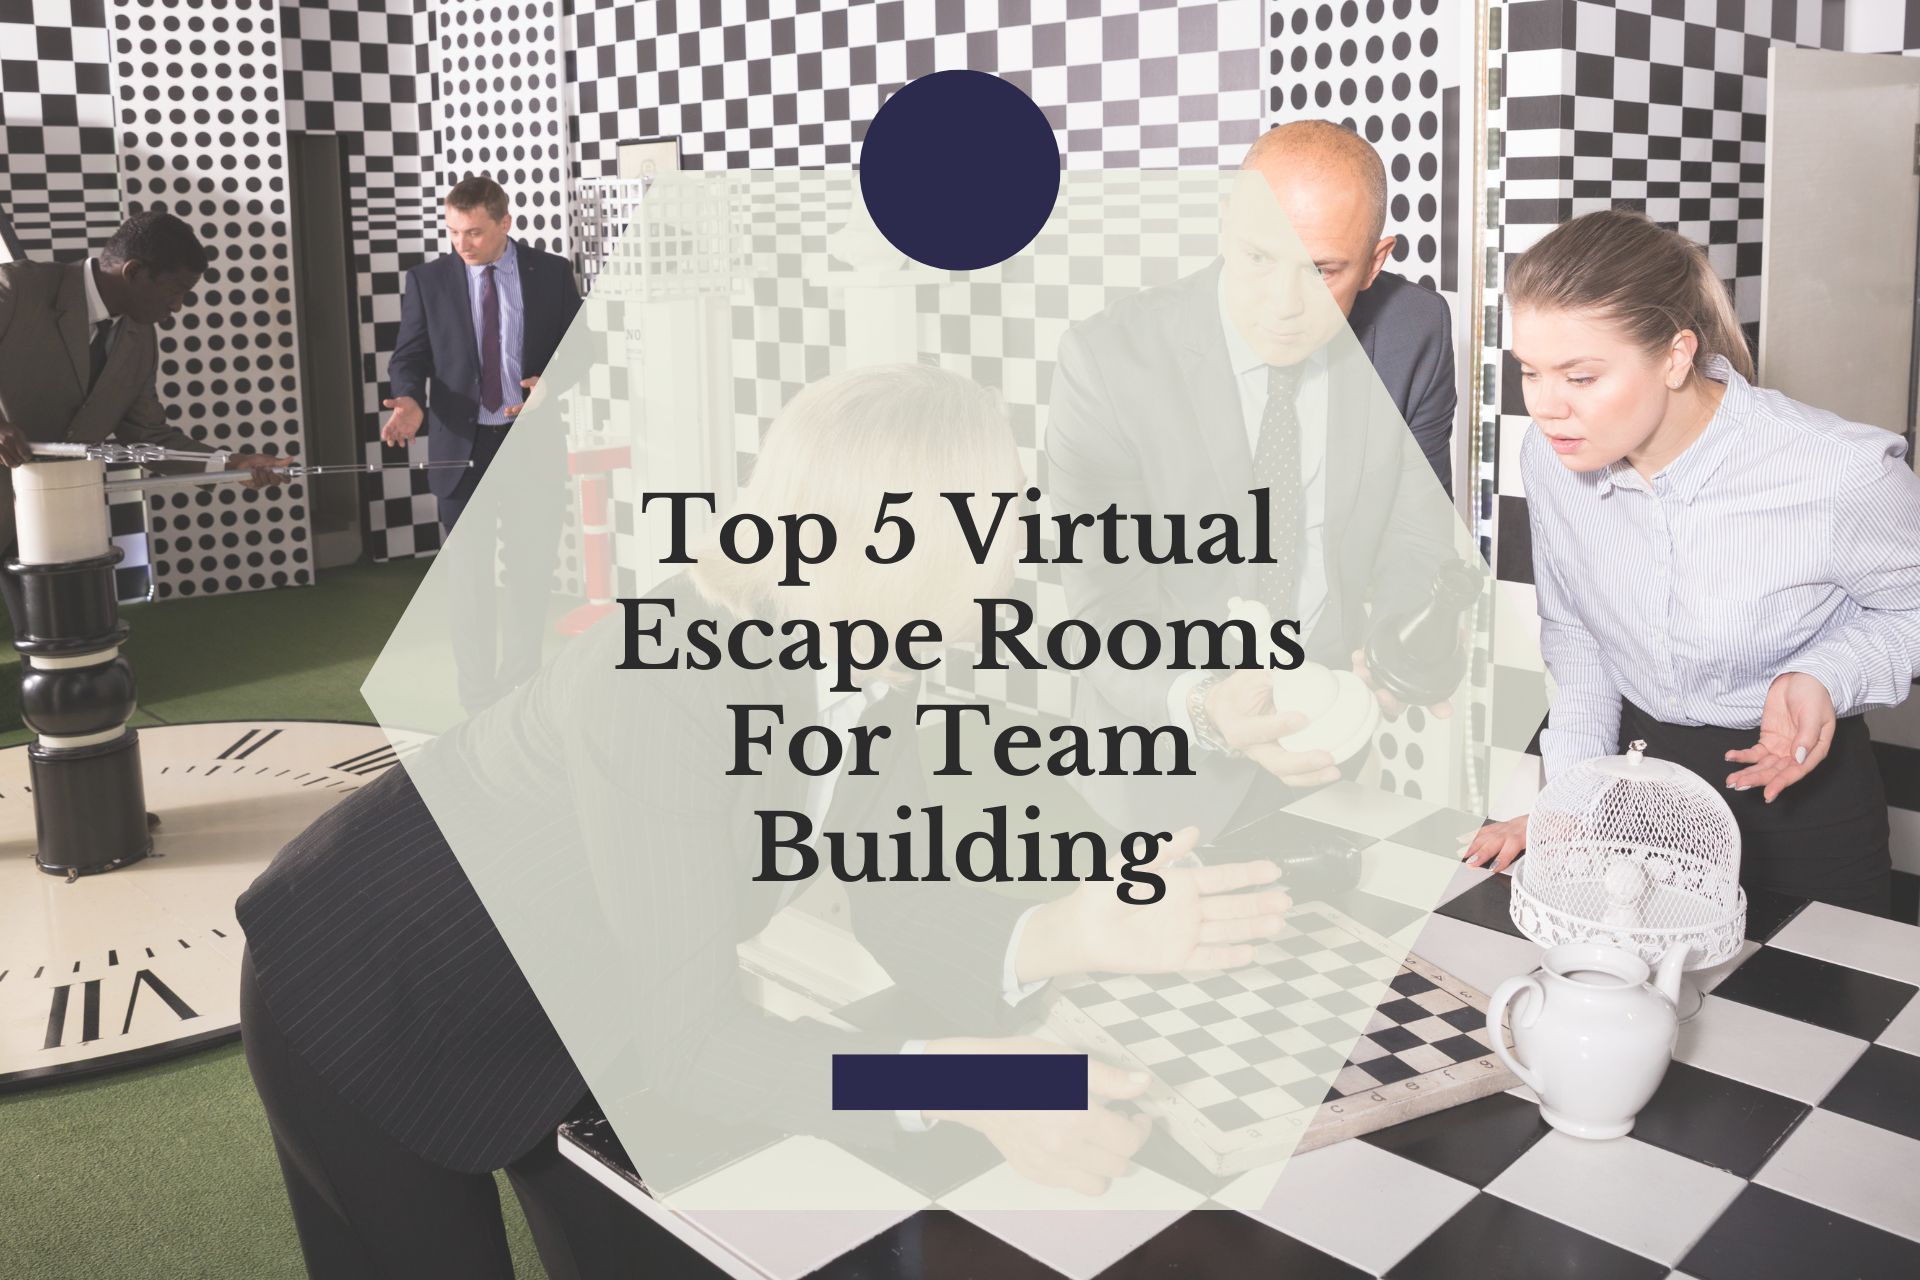 Top 5 Virtual Escape Rooms For Team Building